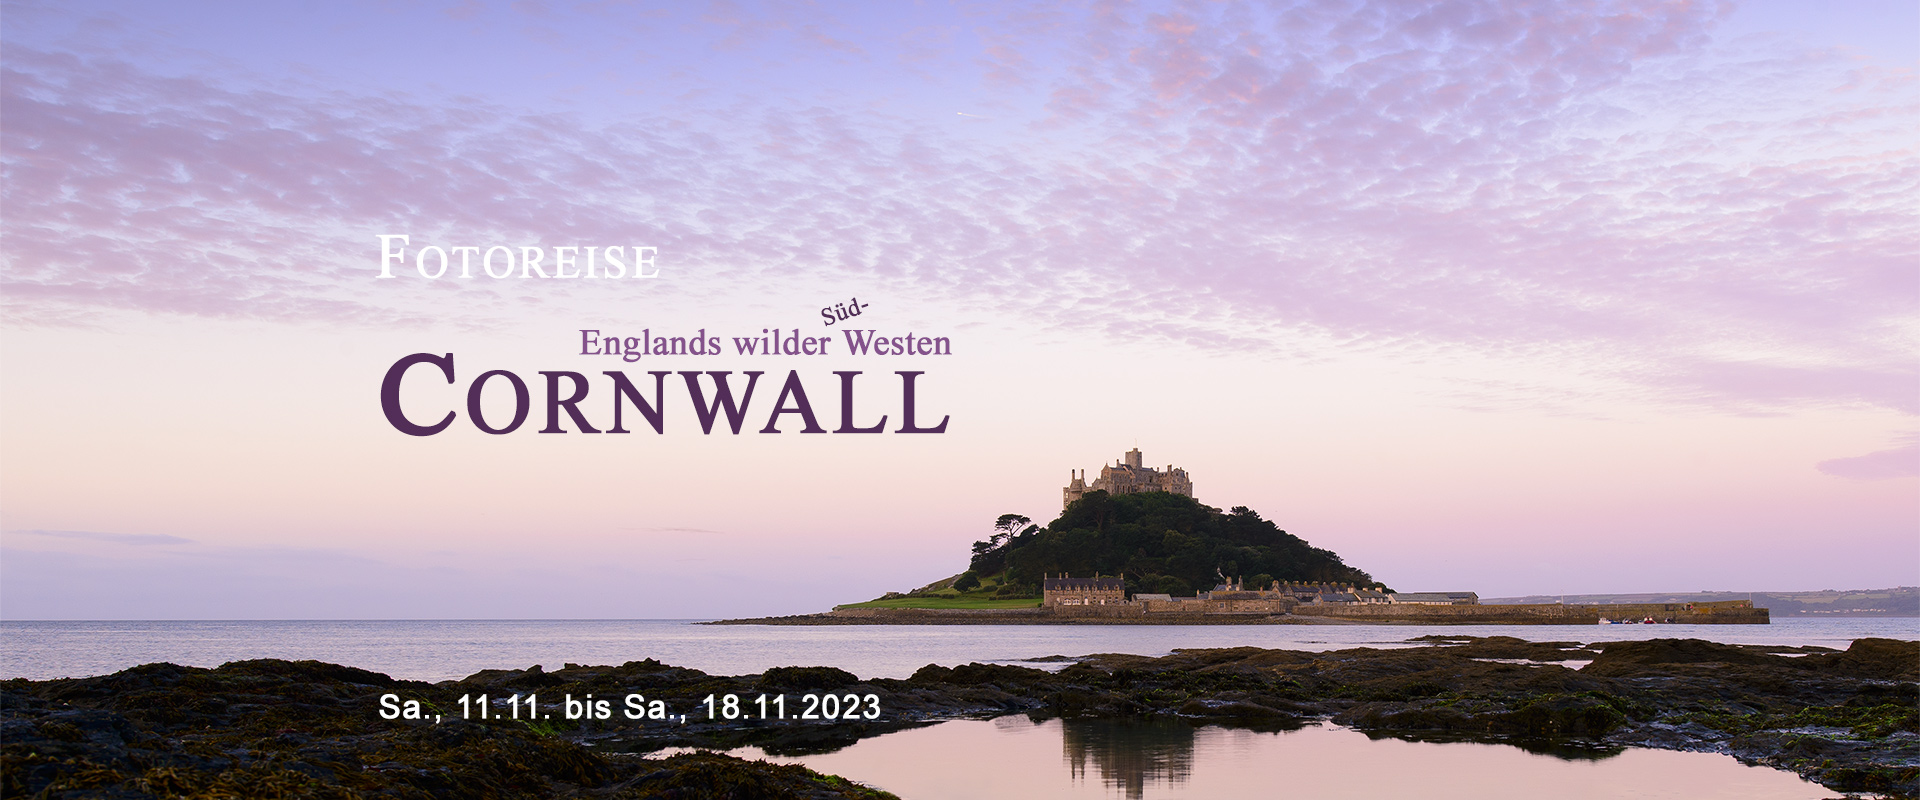 Fotoreise Cornwall 2023 P